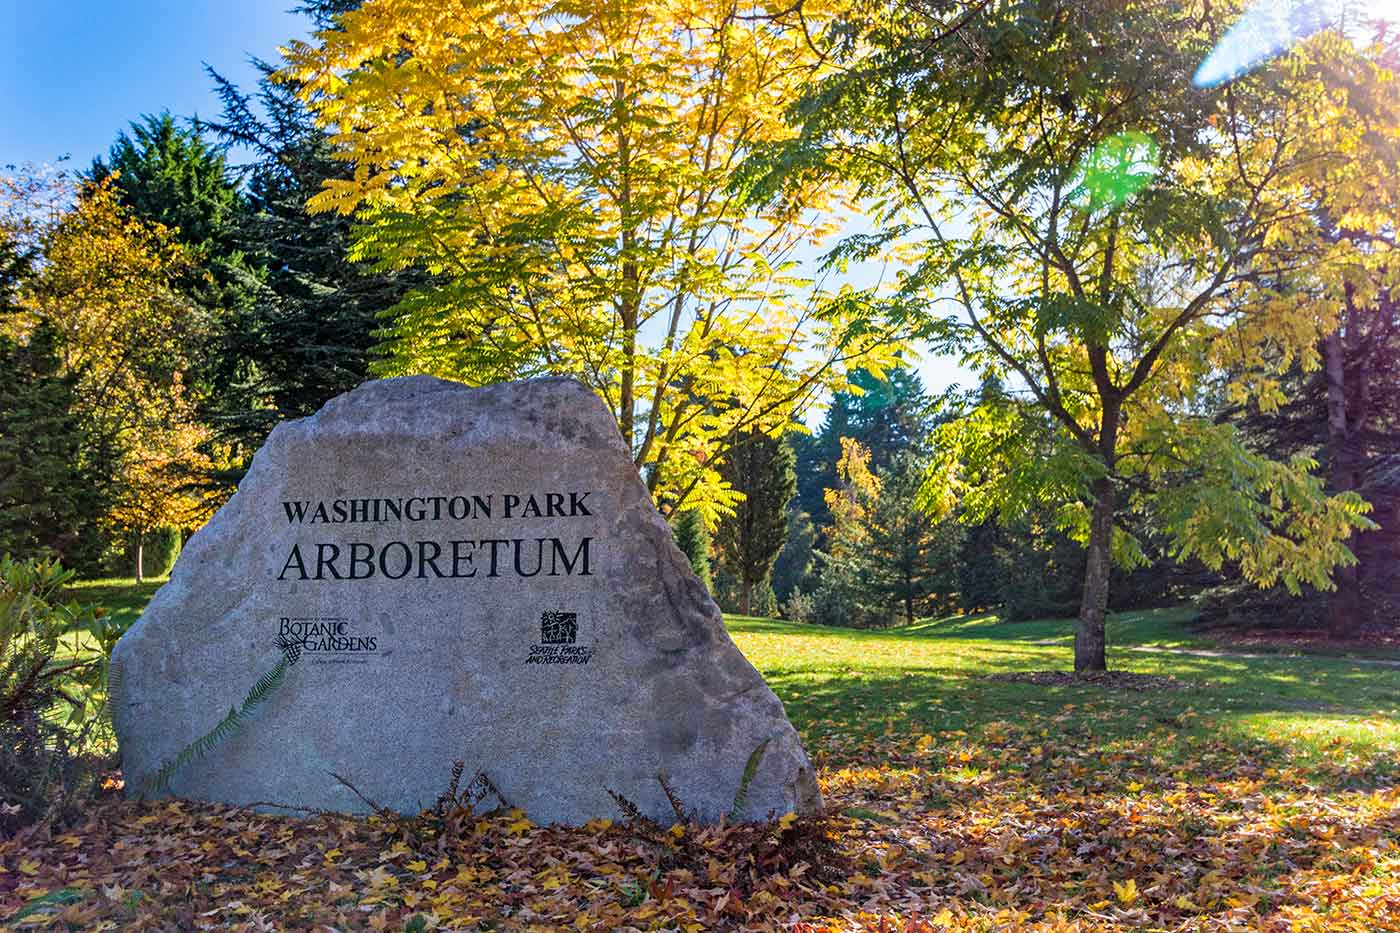 Washington Park Arboretum